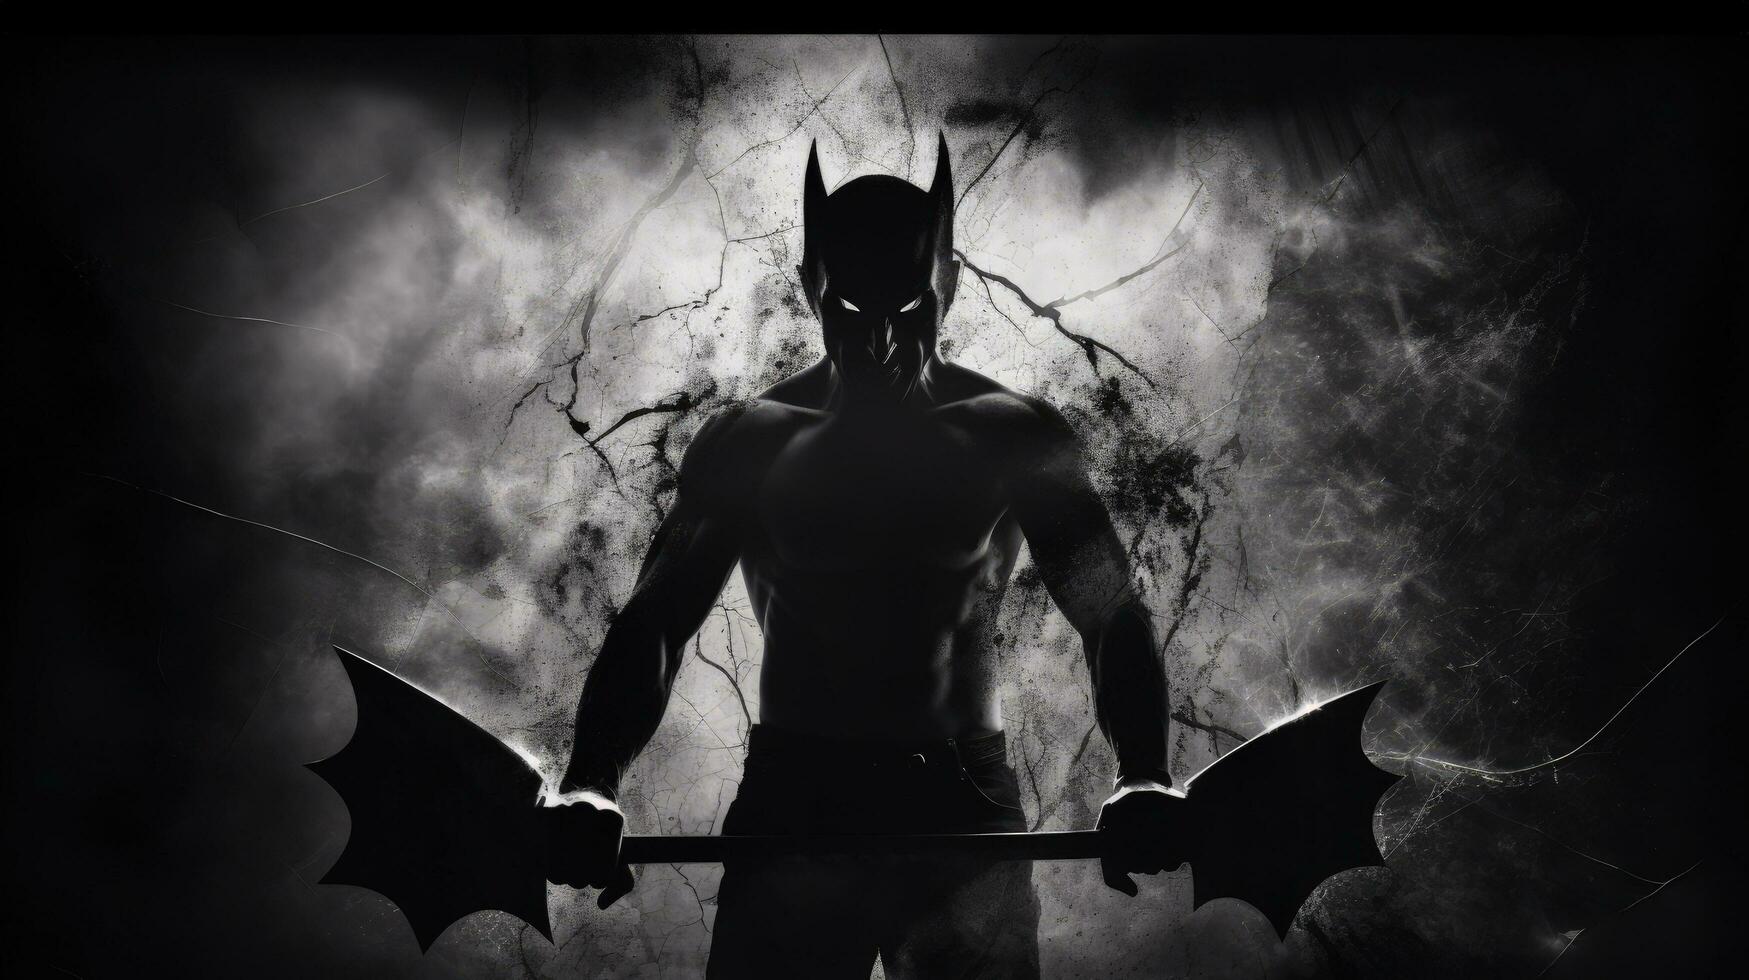 Halloween portrait shows bat wielding dangerous man behind frosted glass. silhouette concept photo